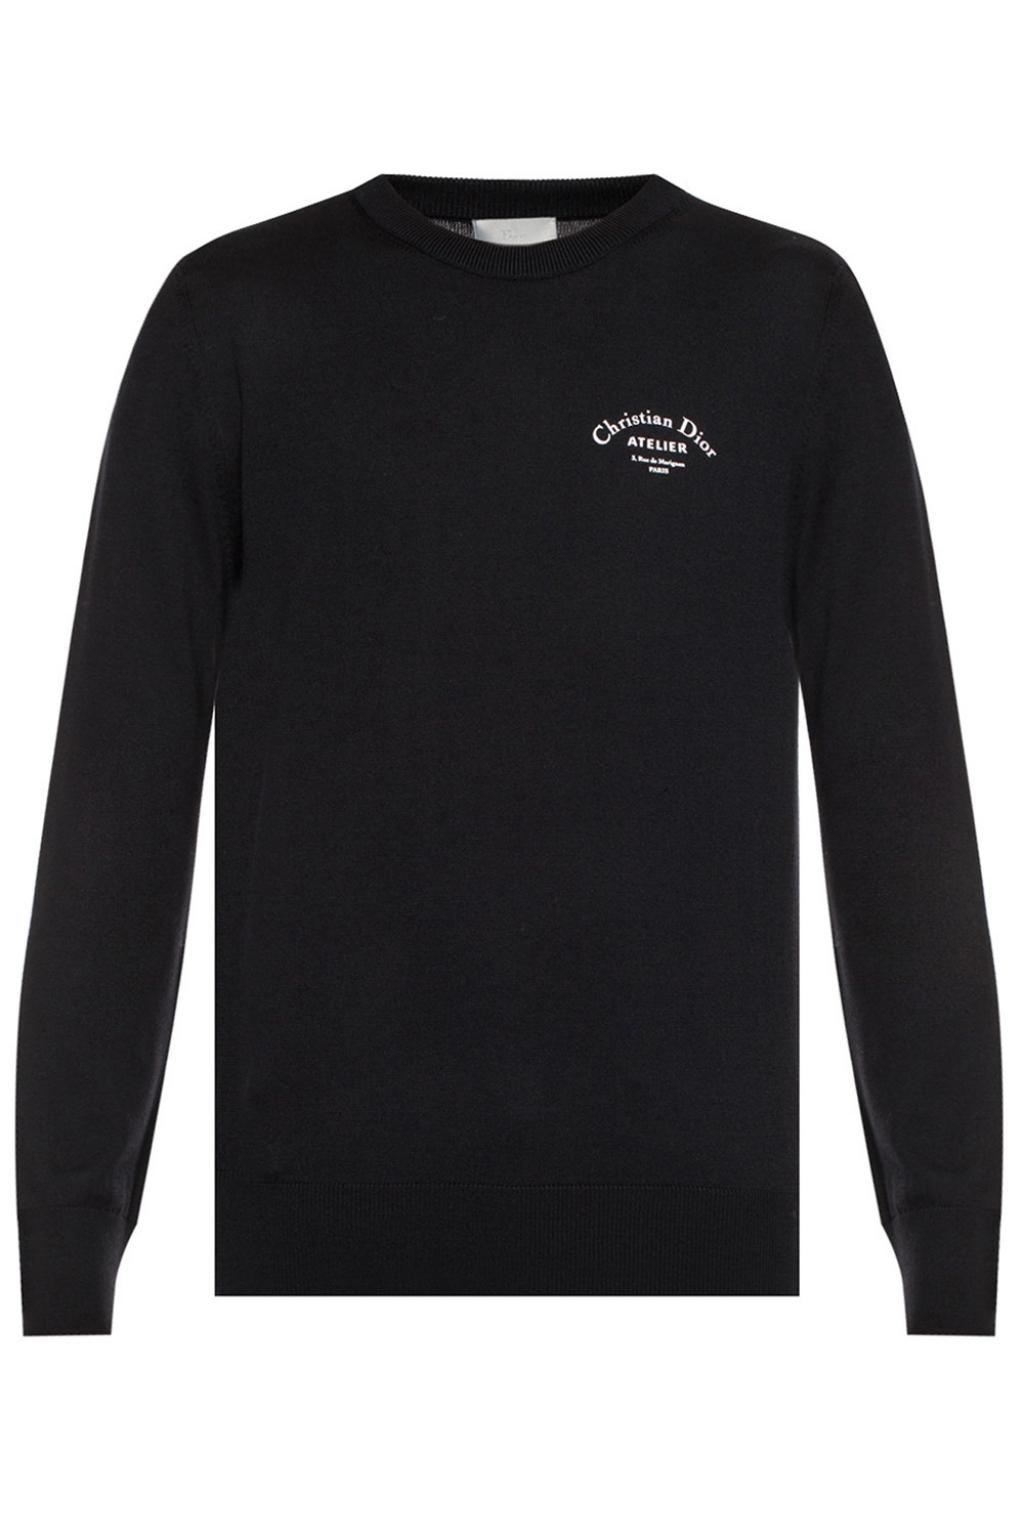 Dior Wool Logo Sweater in Black for Men - Lyst